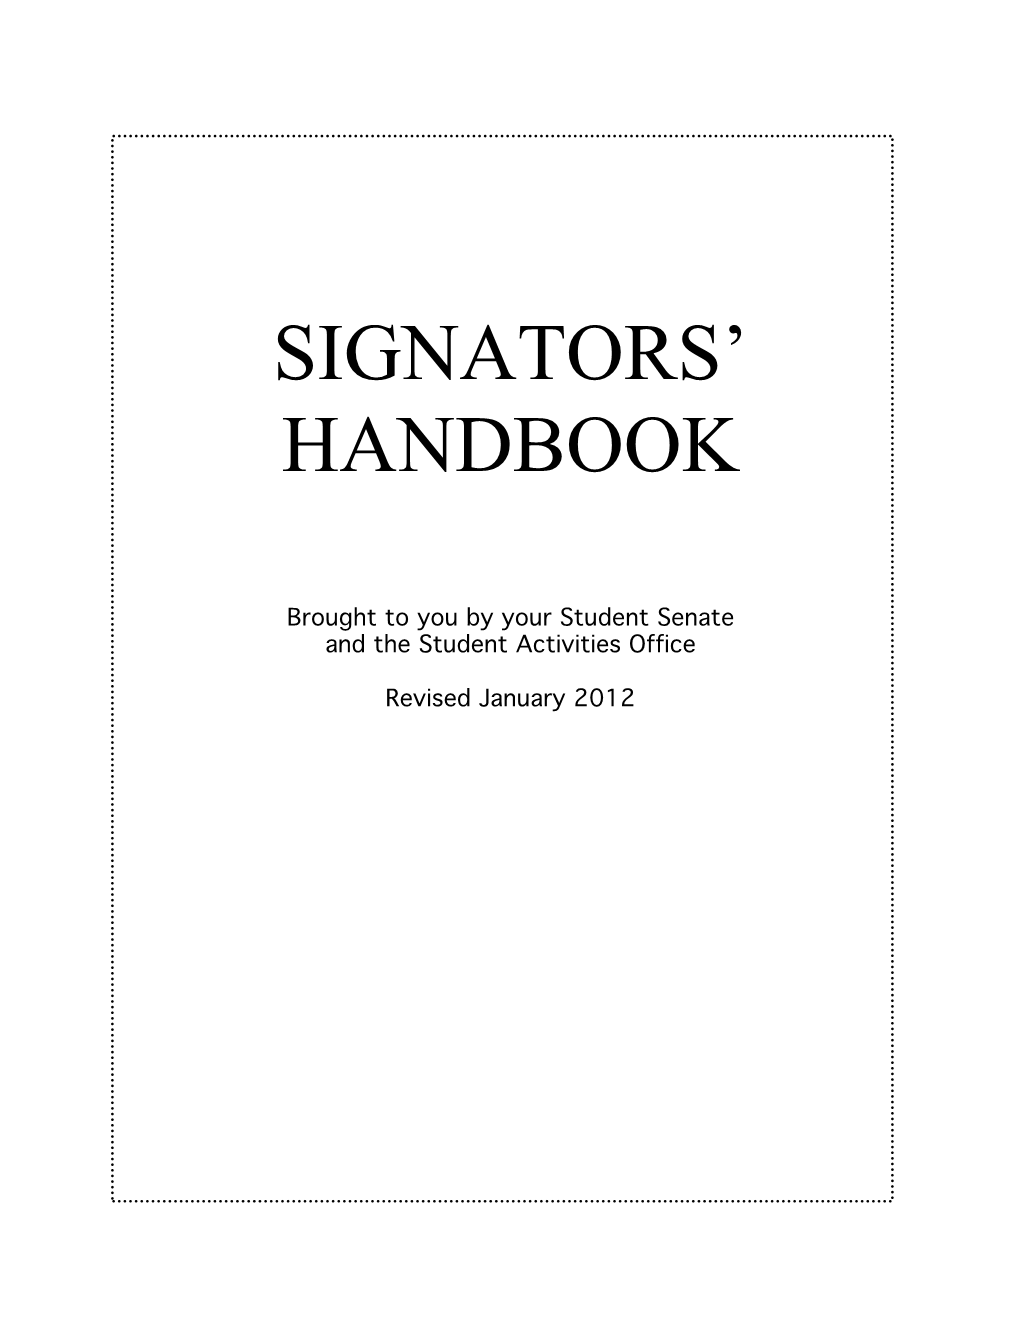 Signators' Handbook